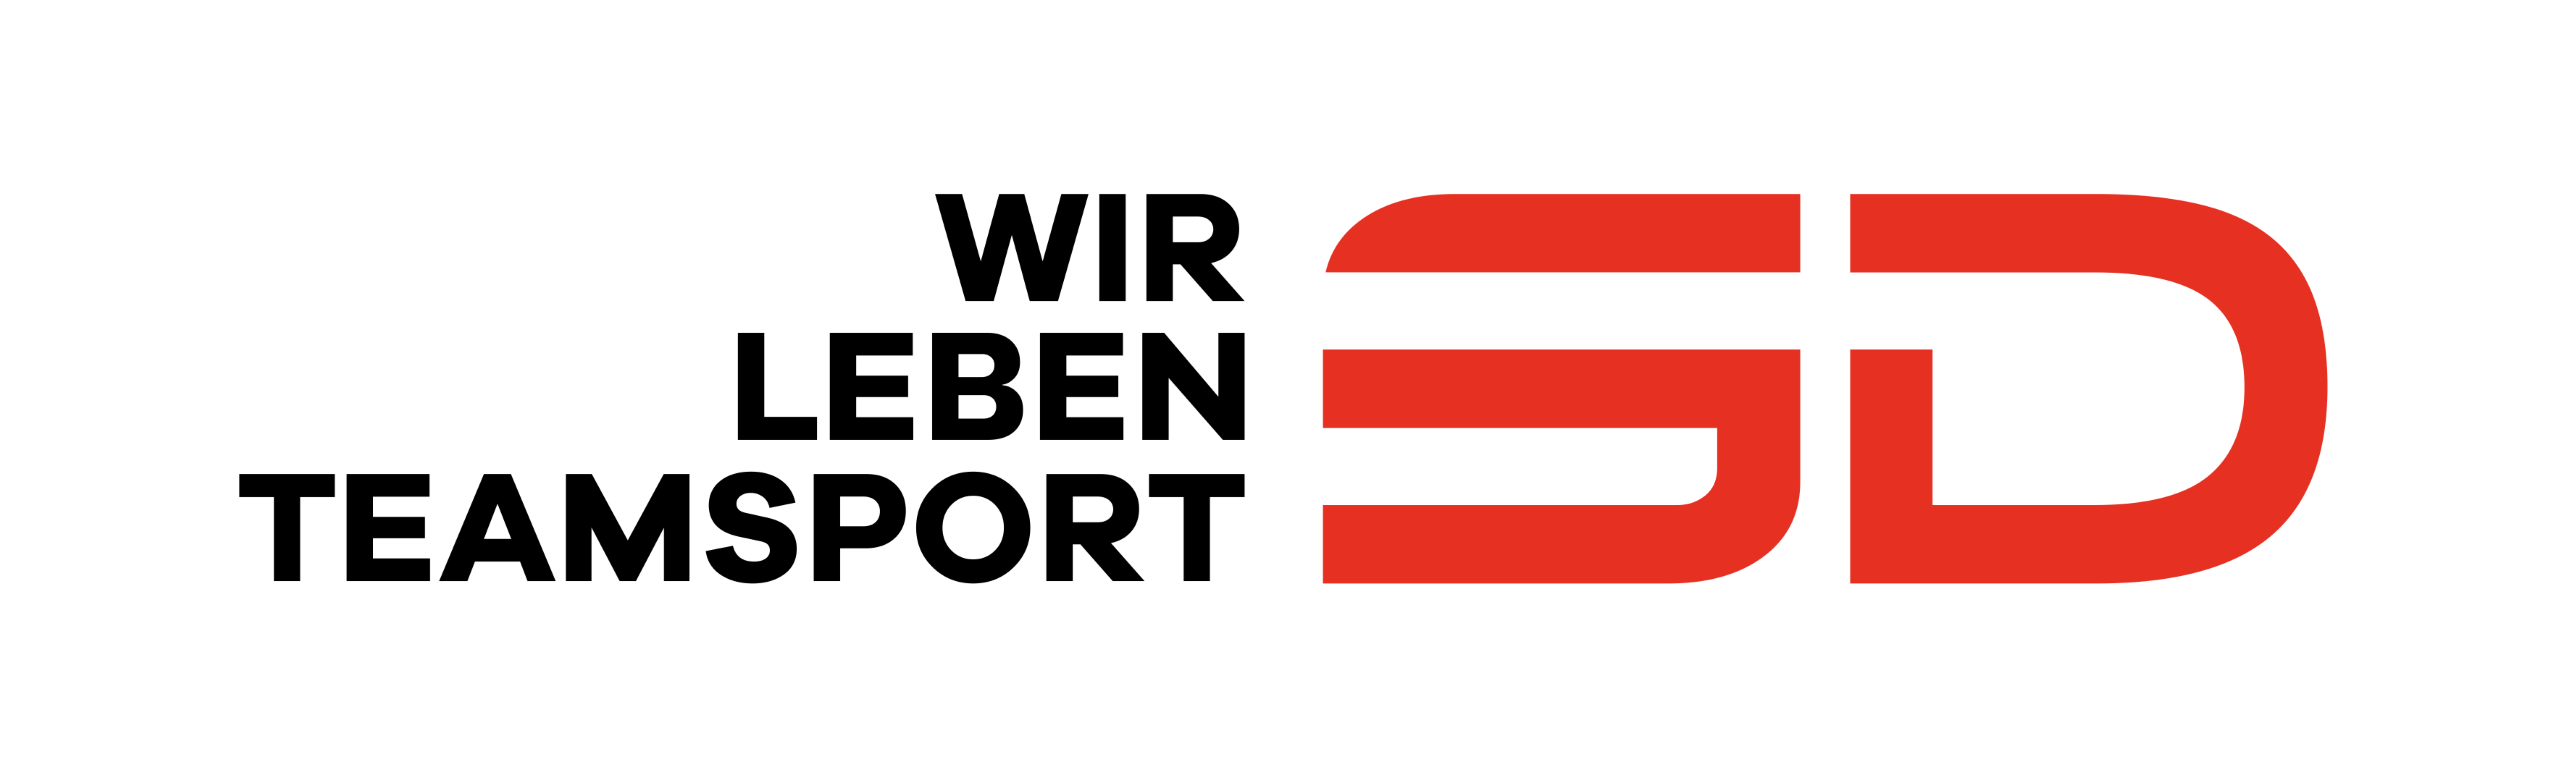 SG FriPe Logo 2